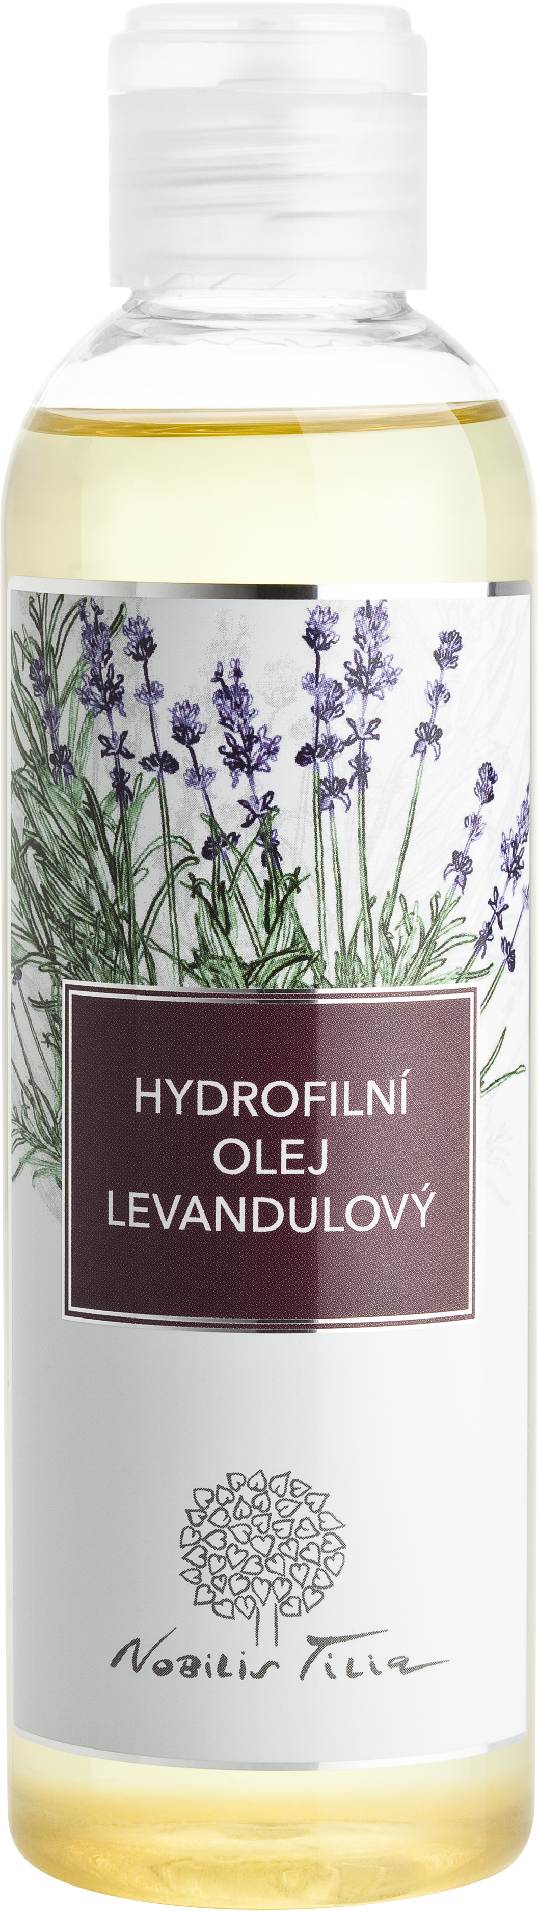 Hydrofilní olej Levandulový: 200 ml